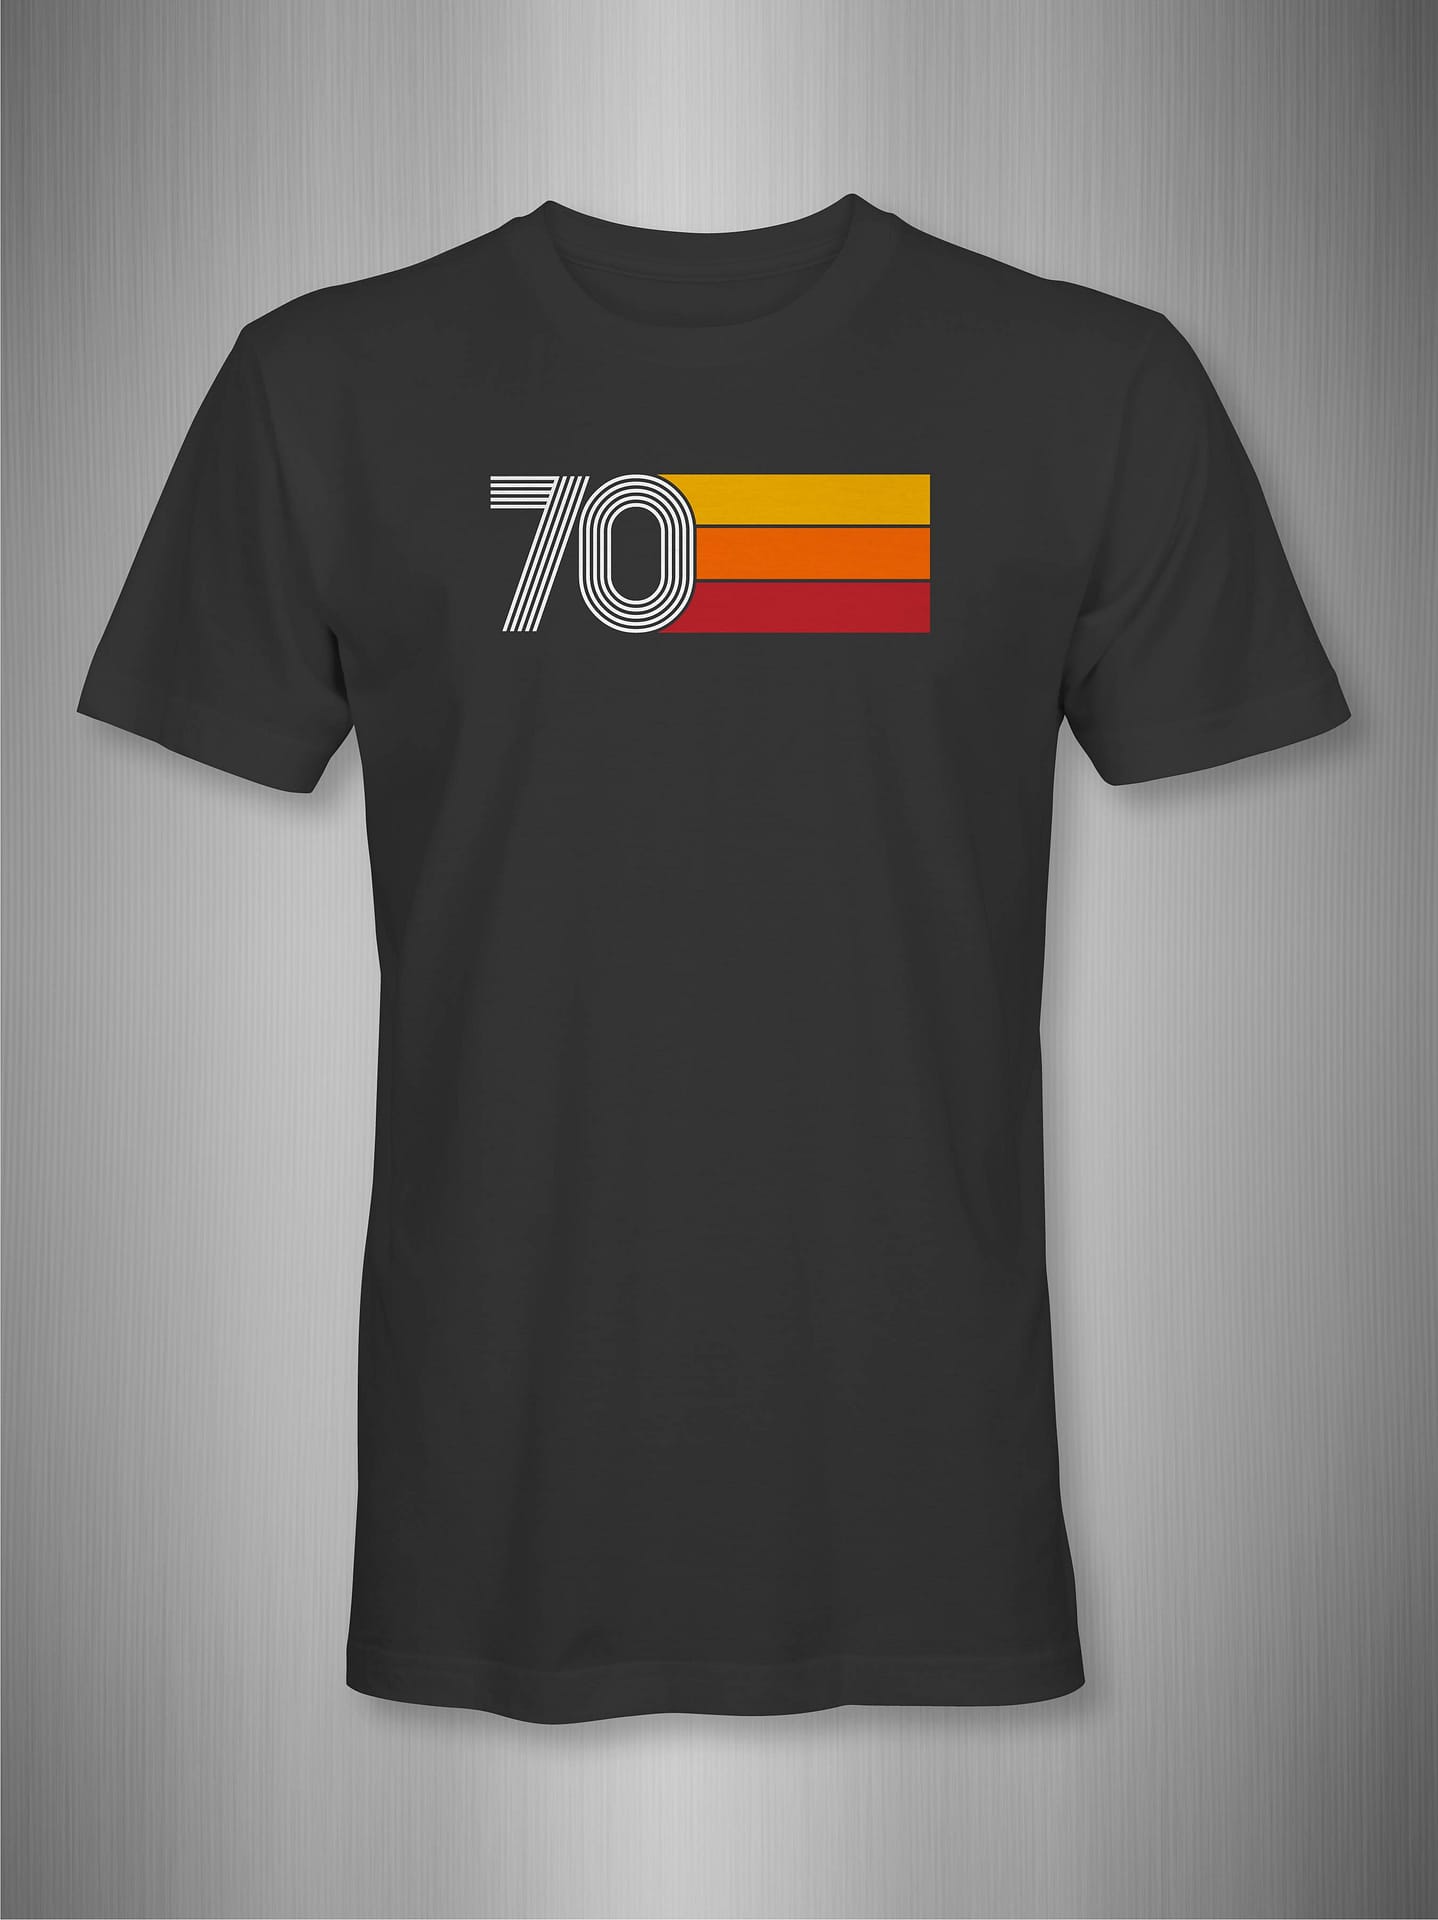 70's (Customize Year)